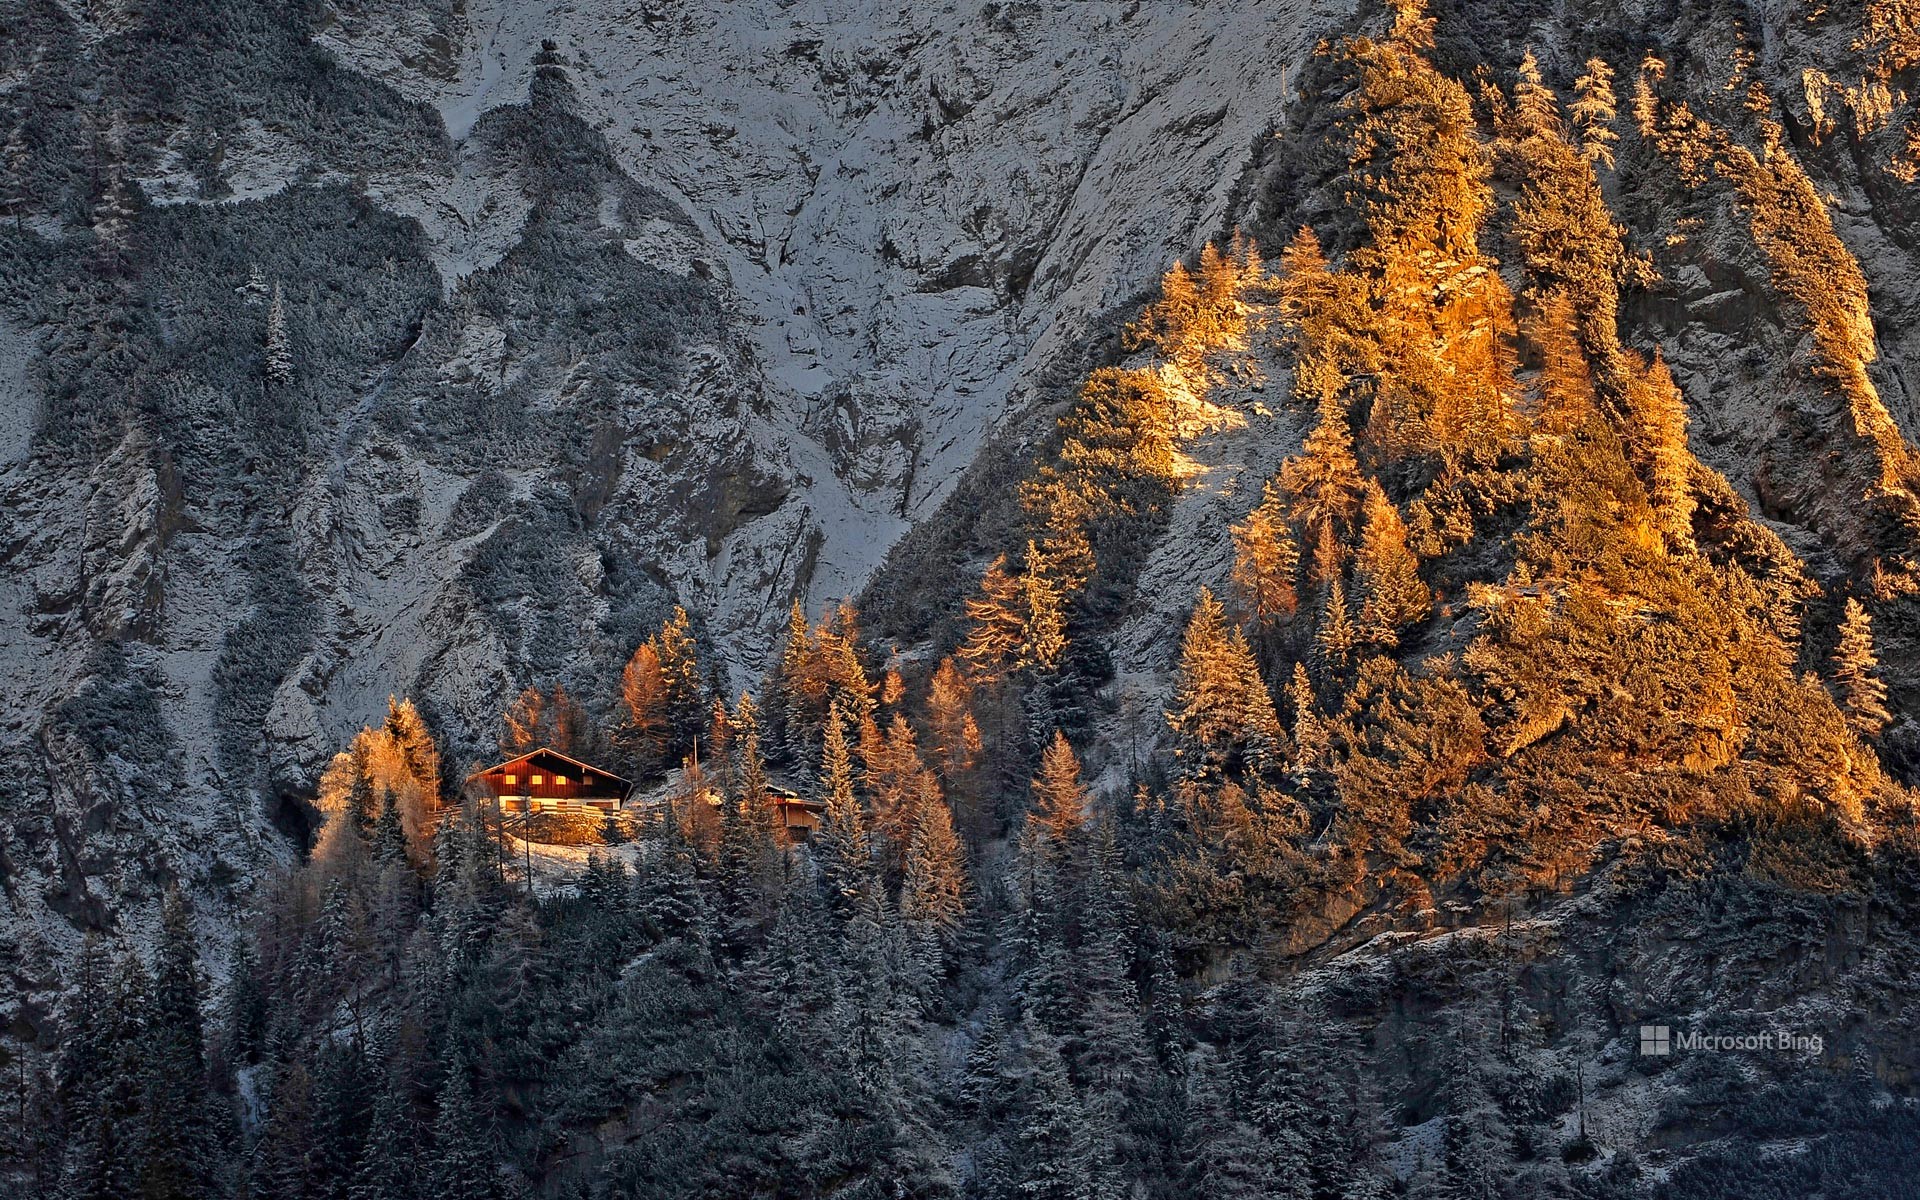 Mittenwalder Hütte in the Bavarian Alps of Germany